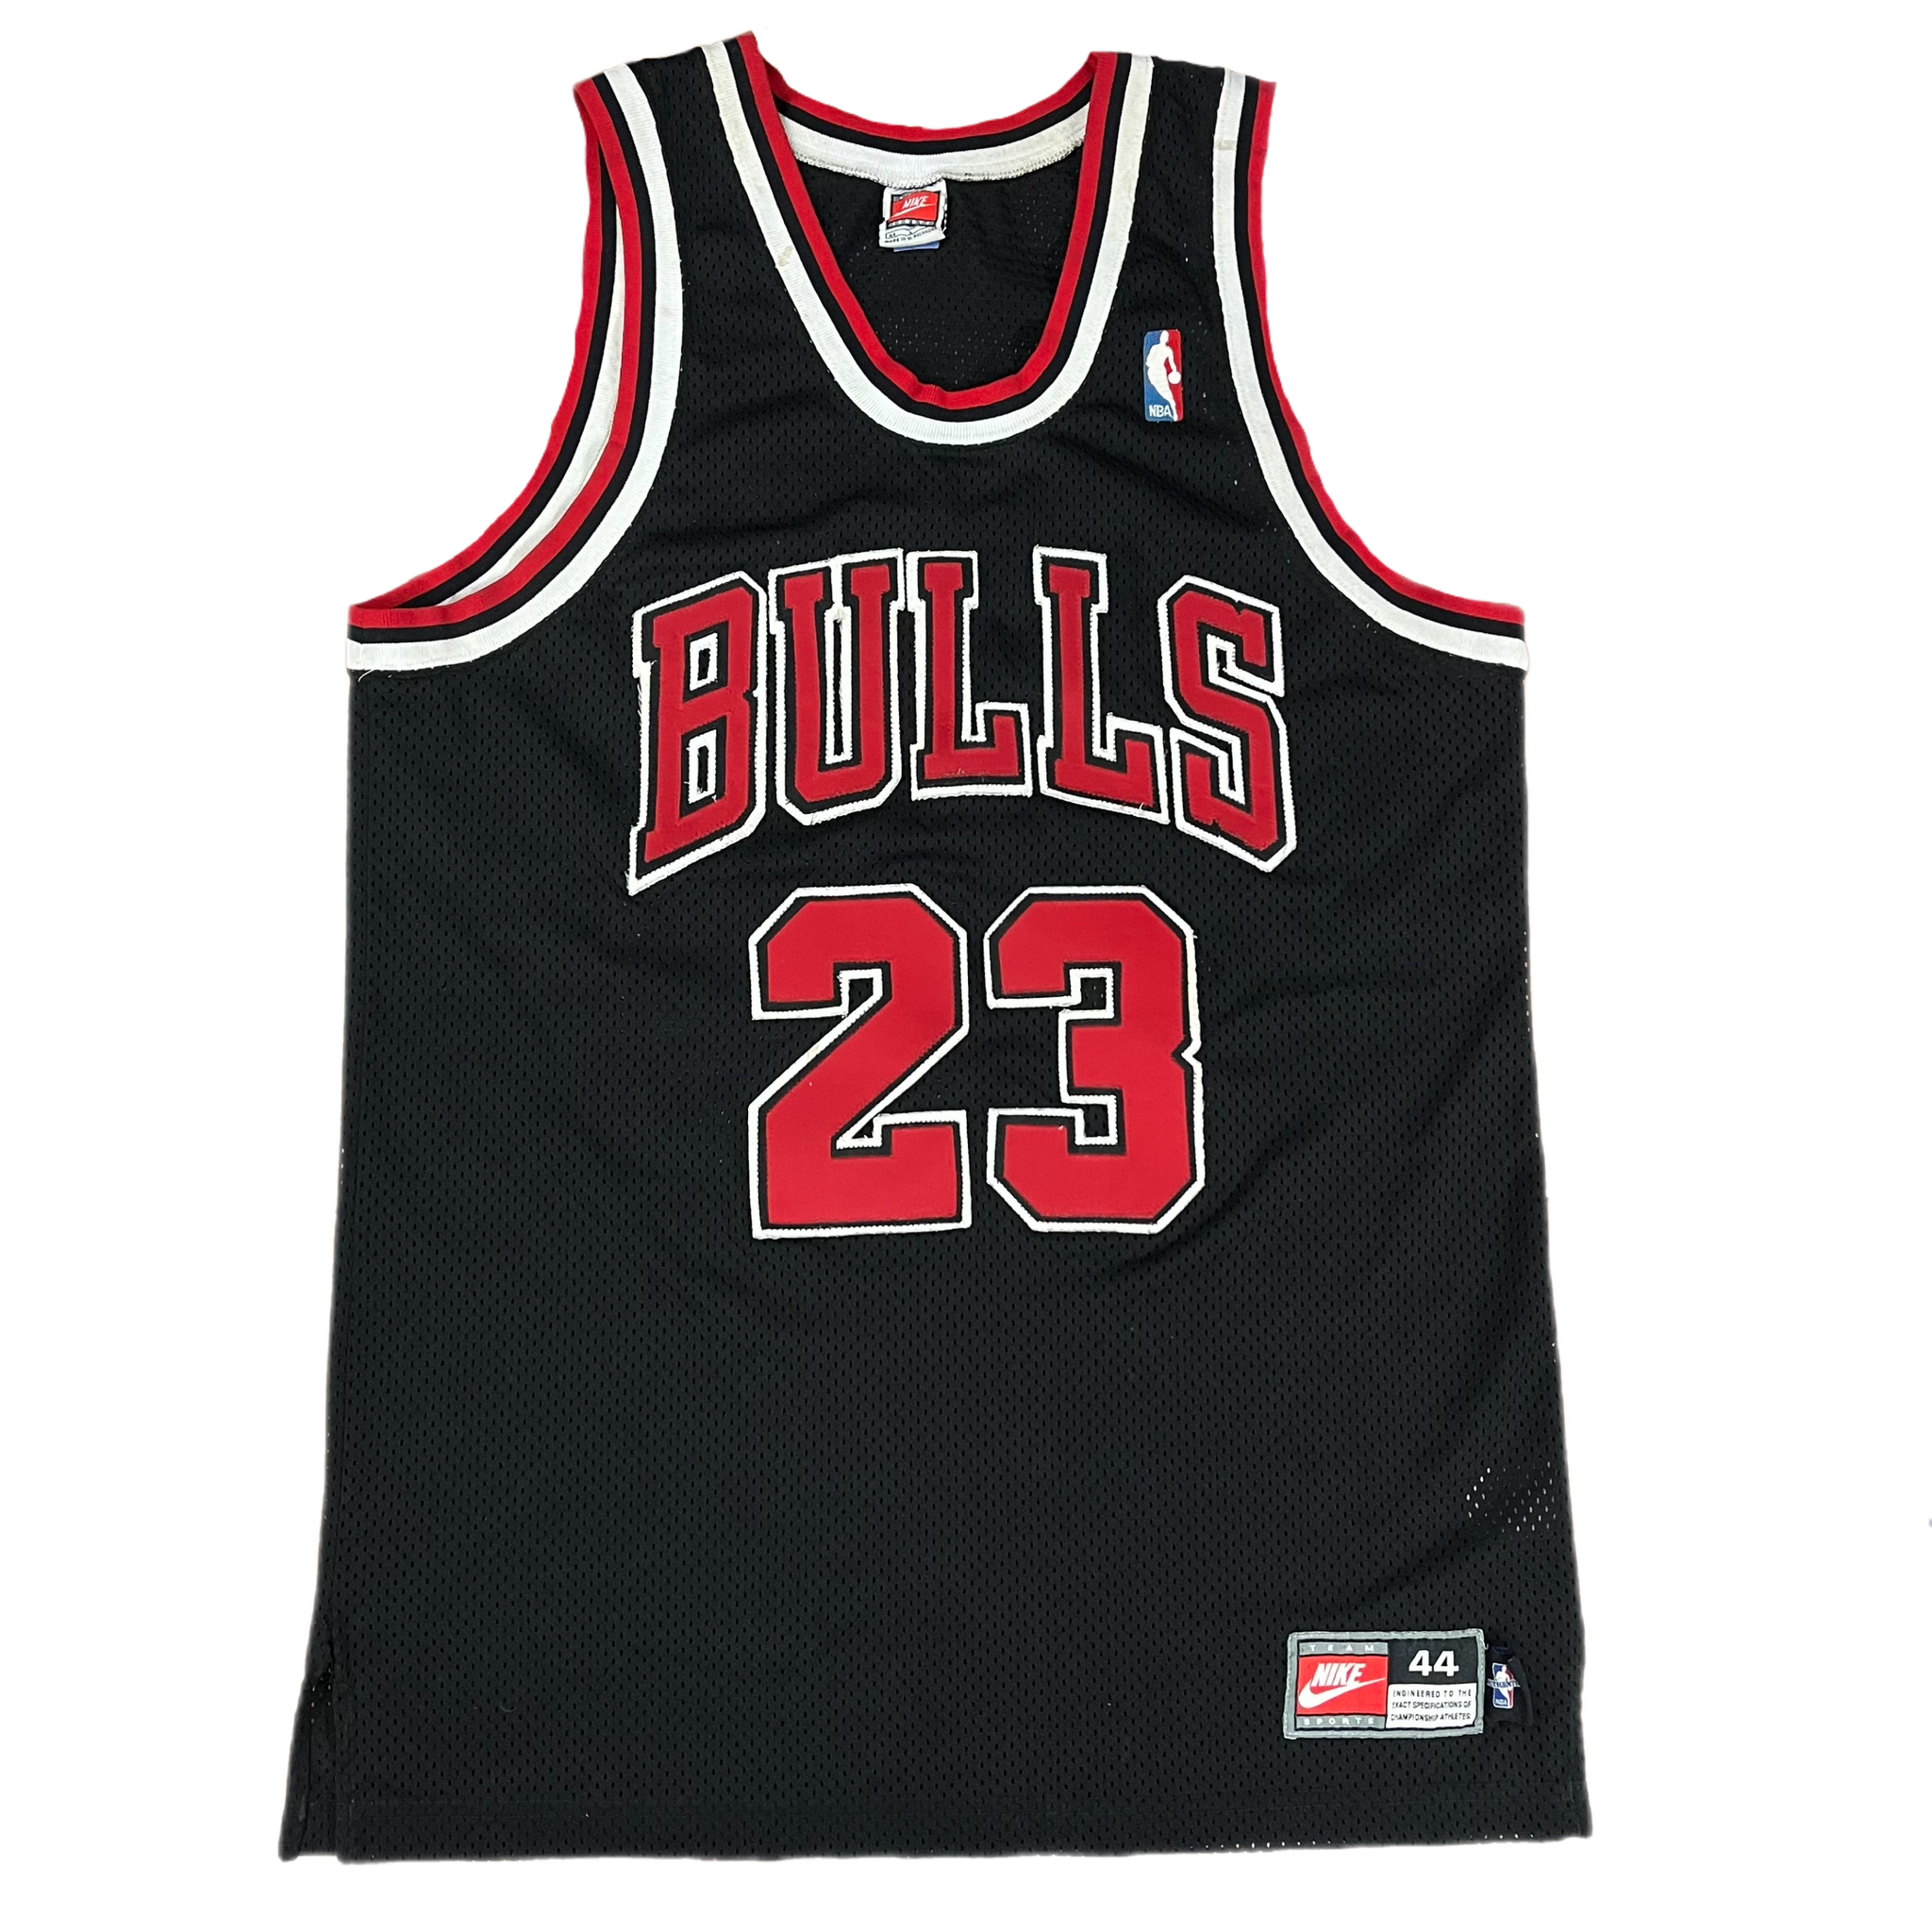 Chicago Bulls Michael Jordan 23 Nba Basketball Throwback Red